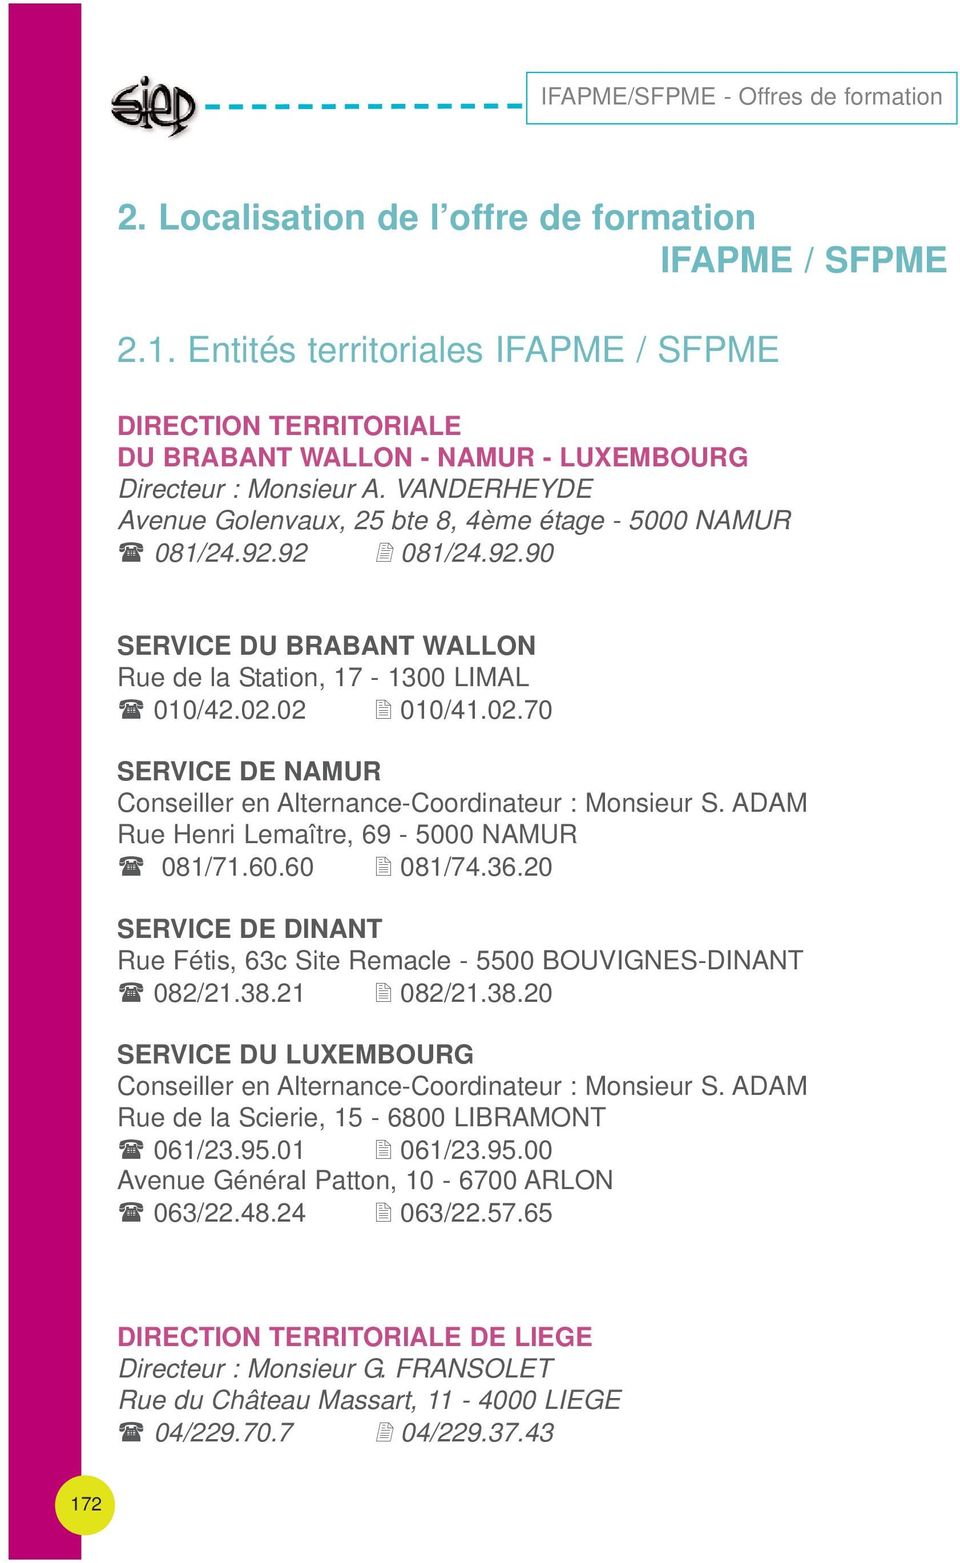 02 010/41.02.70 SERVICE DE NAMUR Conseiller en Alternance-Coordinateur : Monsieur S. ADAM Rue Henri Lemaître, 69-5000 NAMUR 081/71.60.60 081/74.36.